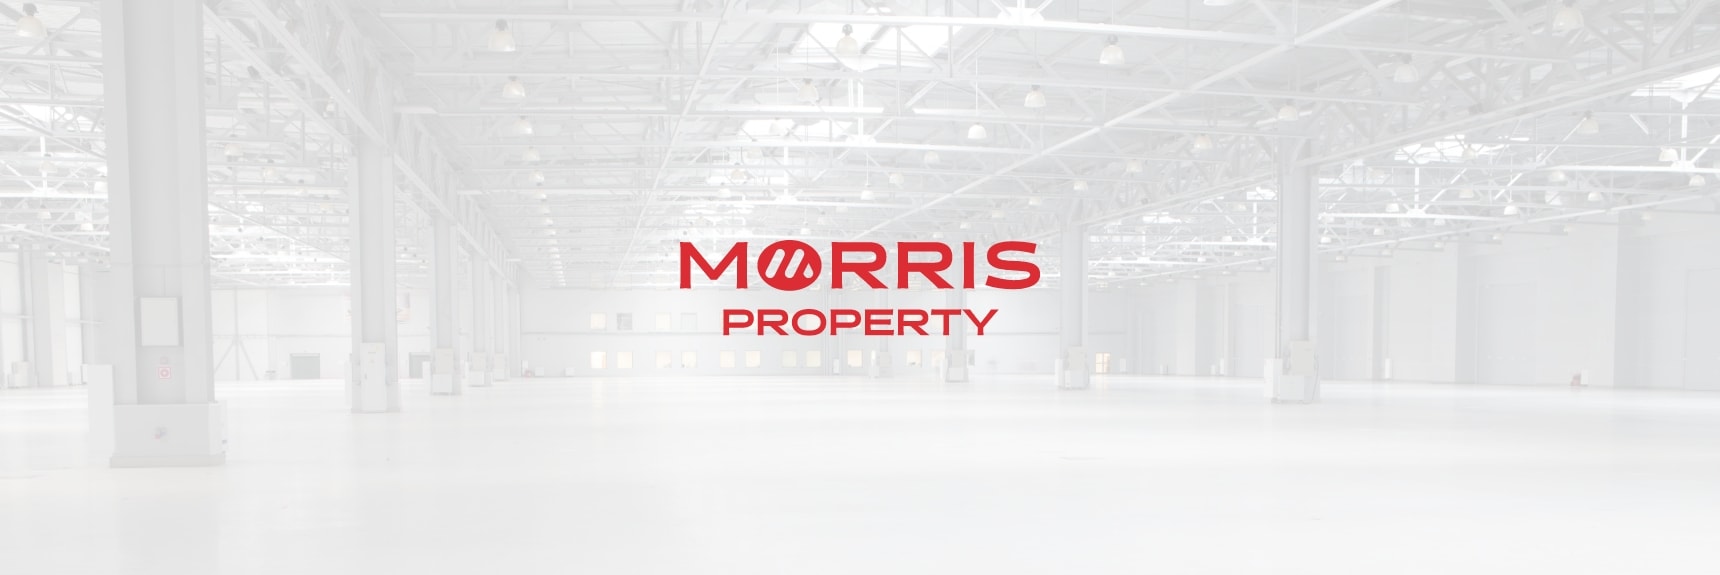 Morris Property